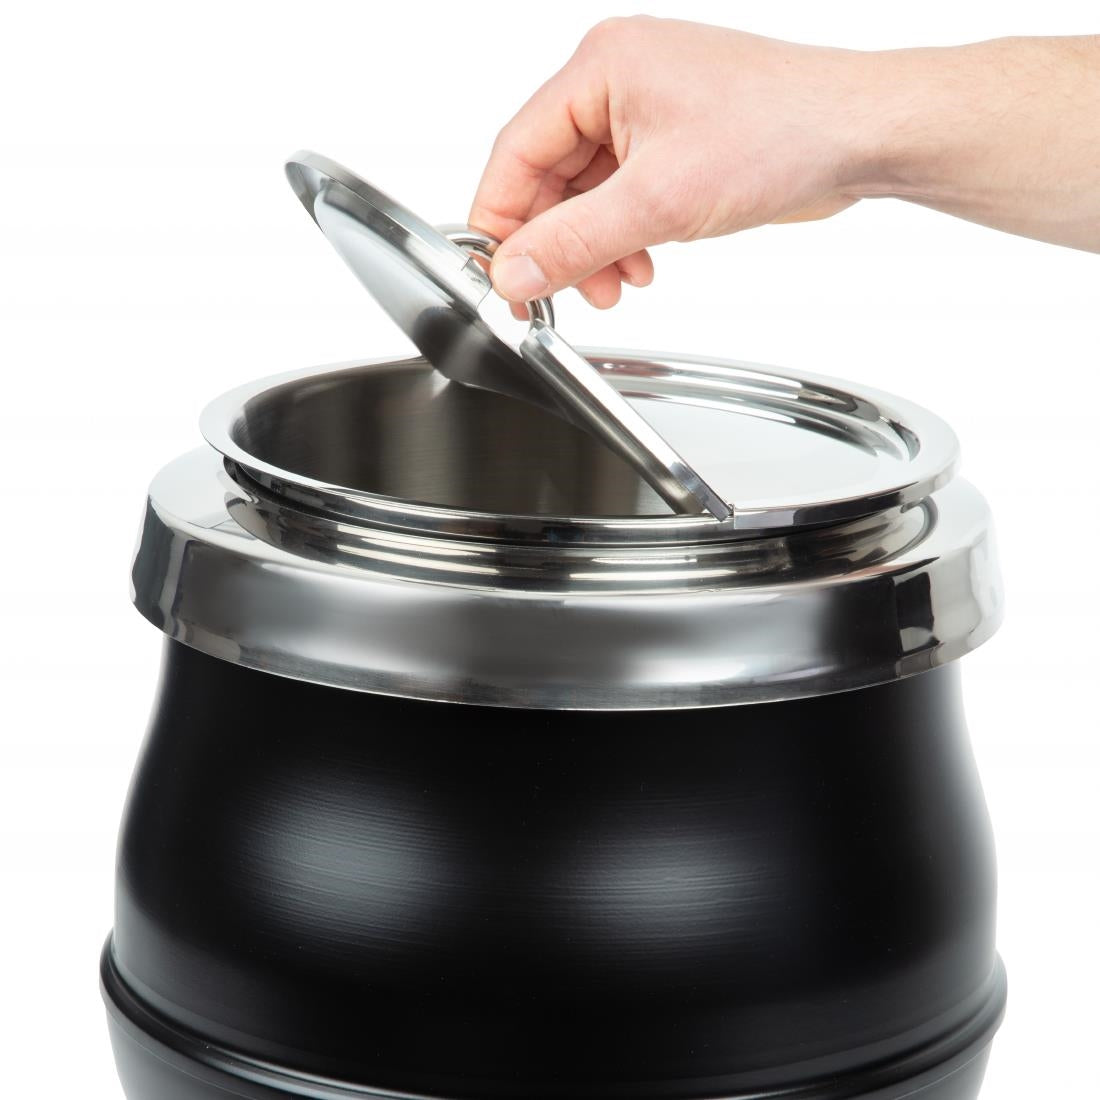 Dualit Hotpot Soup Kettle Satin Black 70012 JD Catering Equipment Solutions Ltd